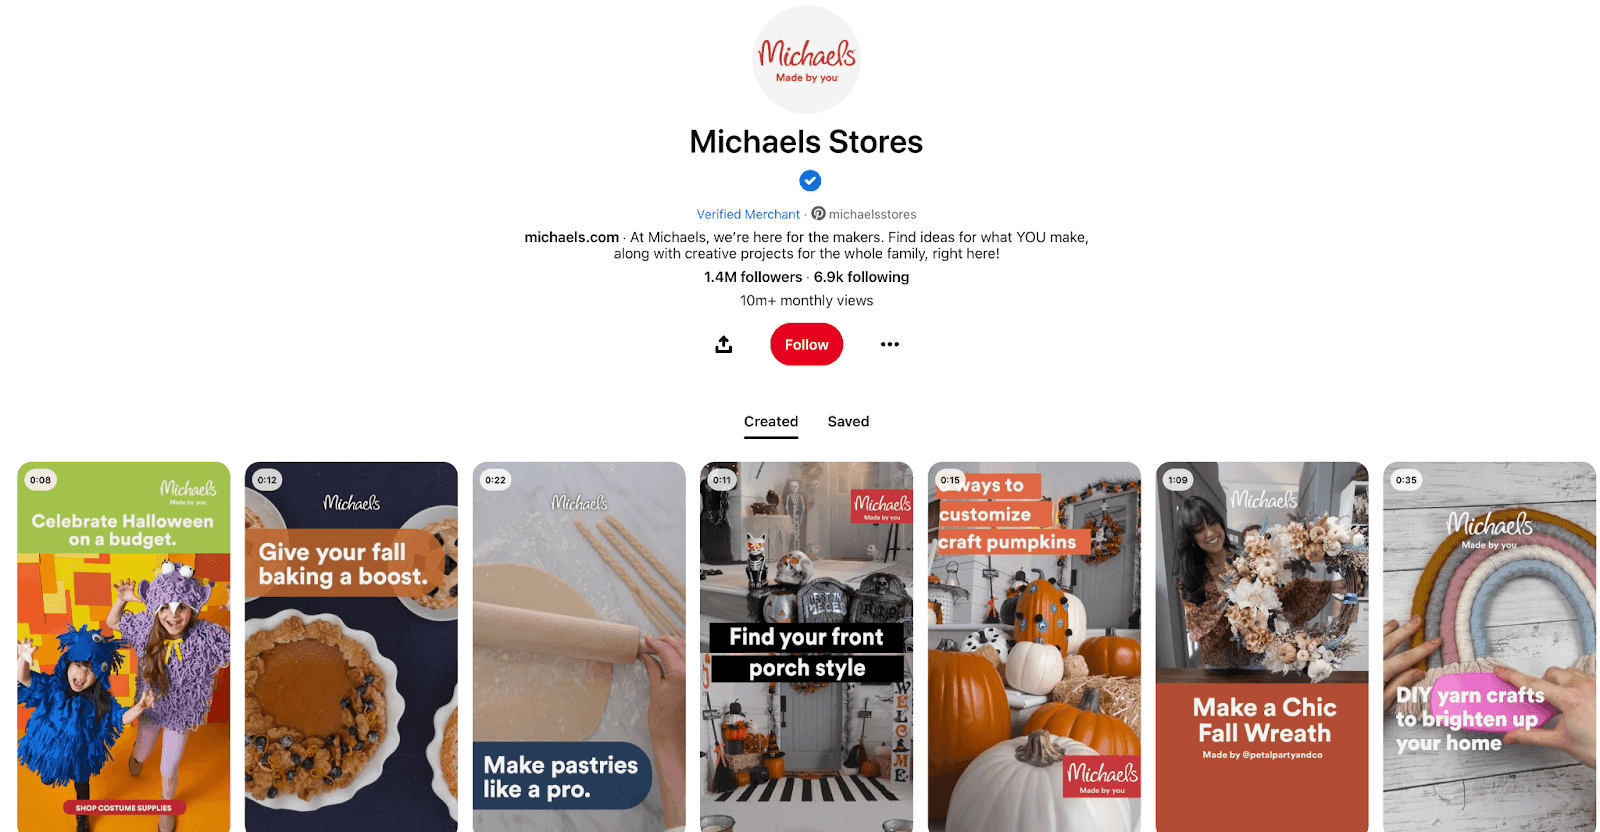 Michaels Stores seasonal content